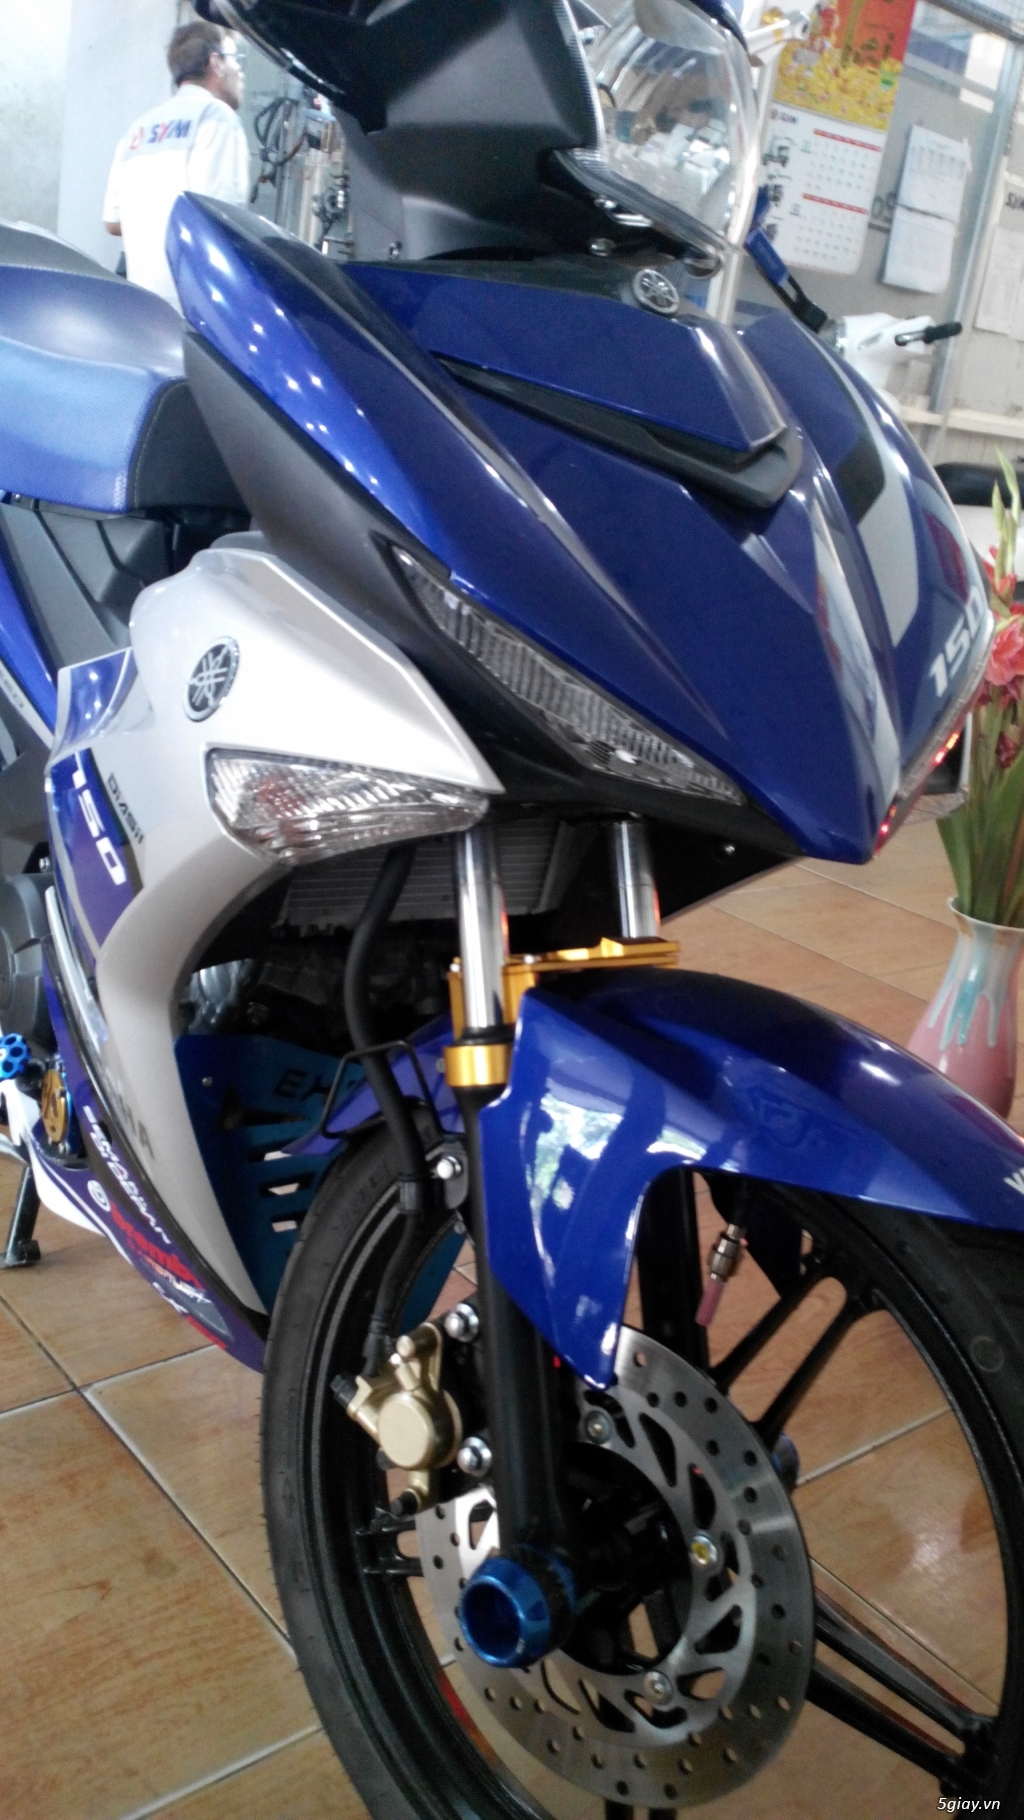 Xe Yamaha Exciter 150cc 2016 màu xanh GP ( Xe demo) giá tốt. !!!!! - 3